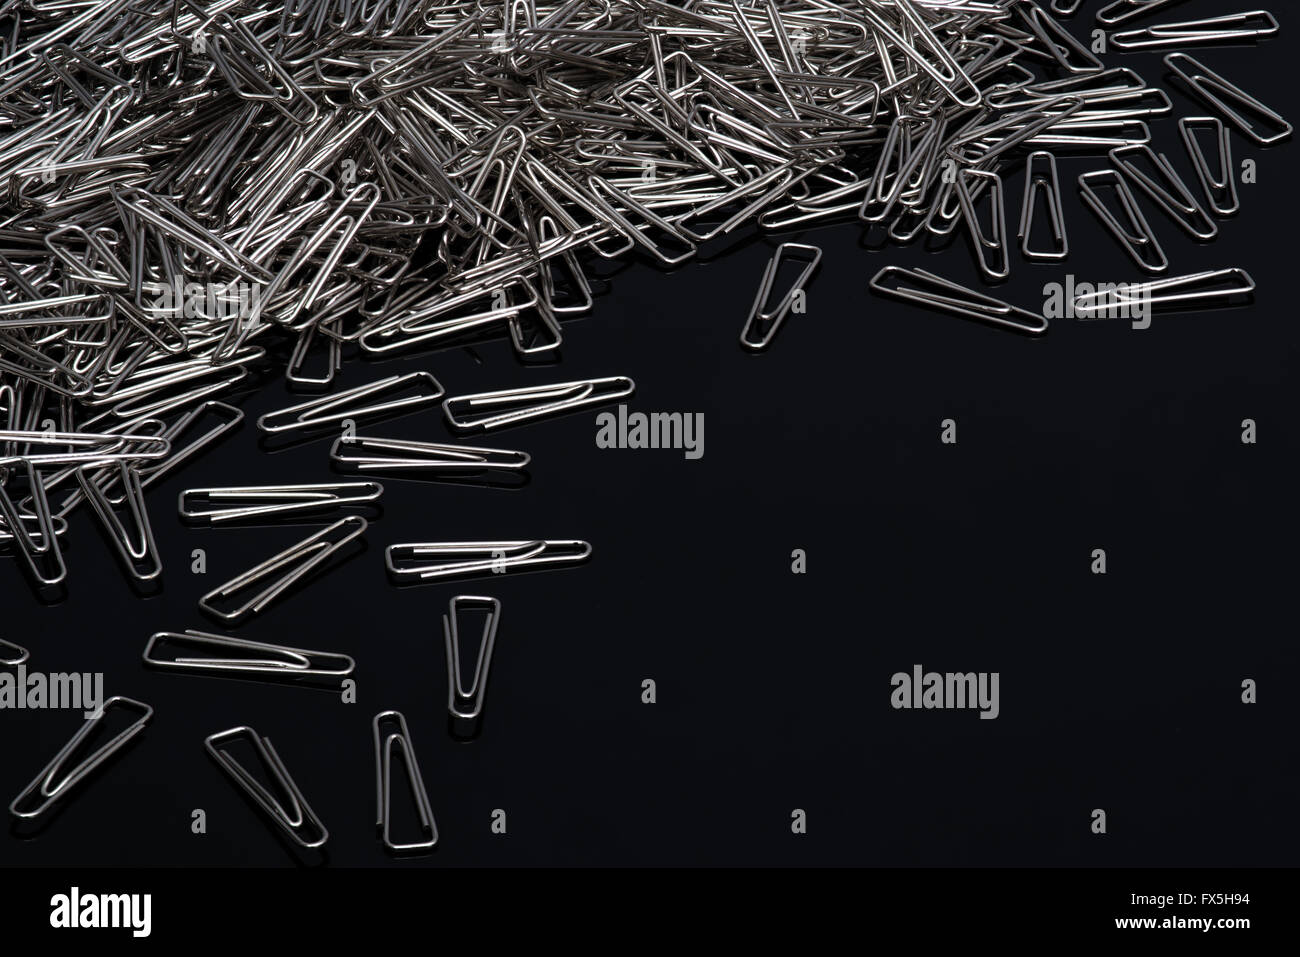 Paper clips on black background Stock Photo - Alamy